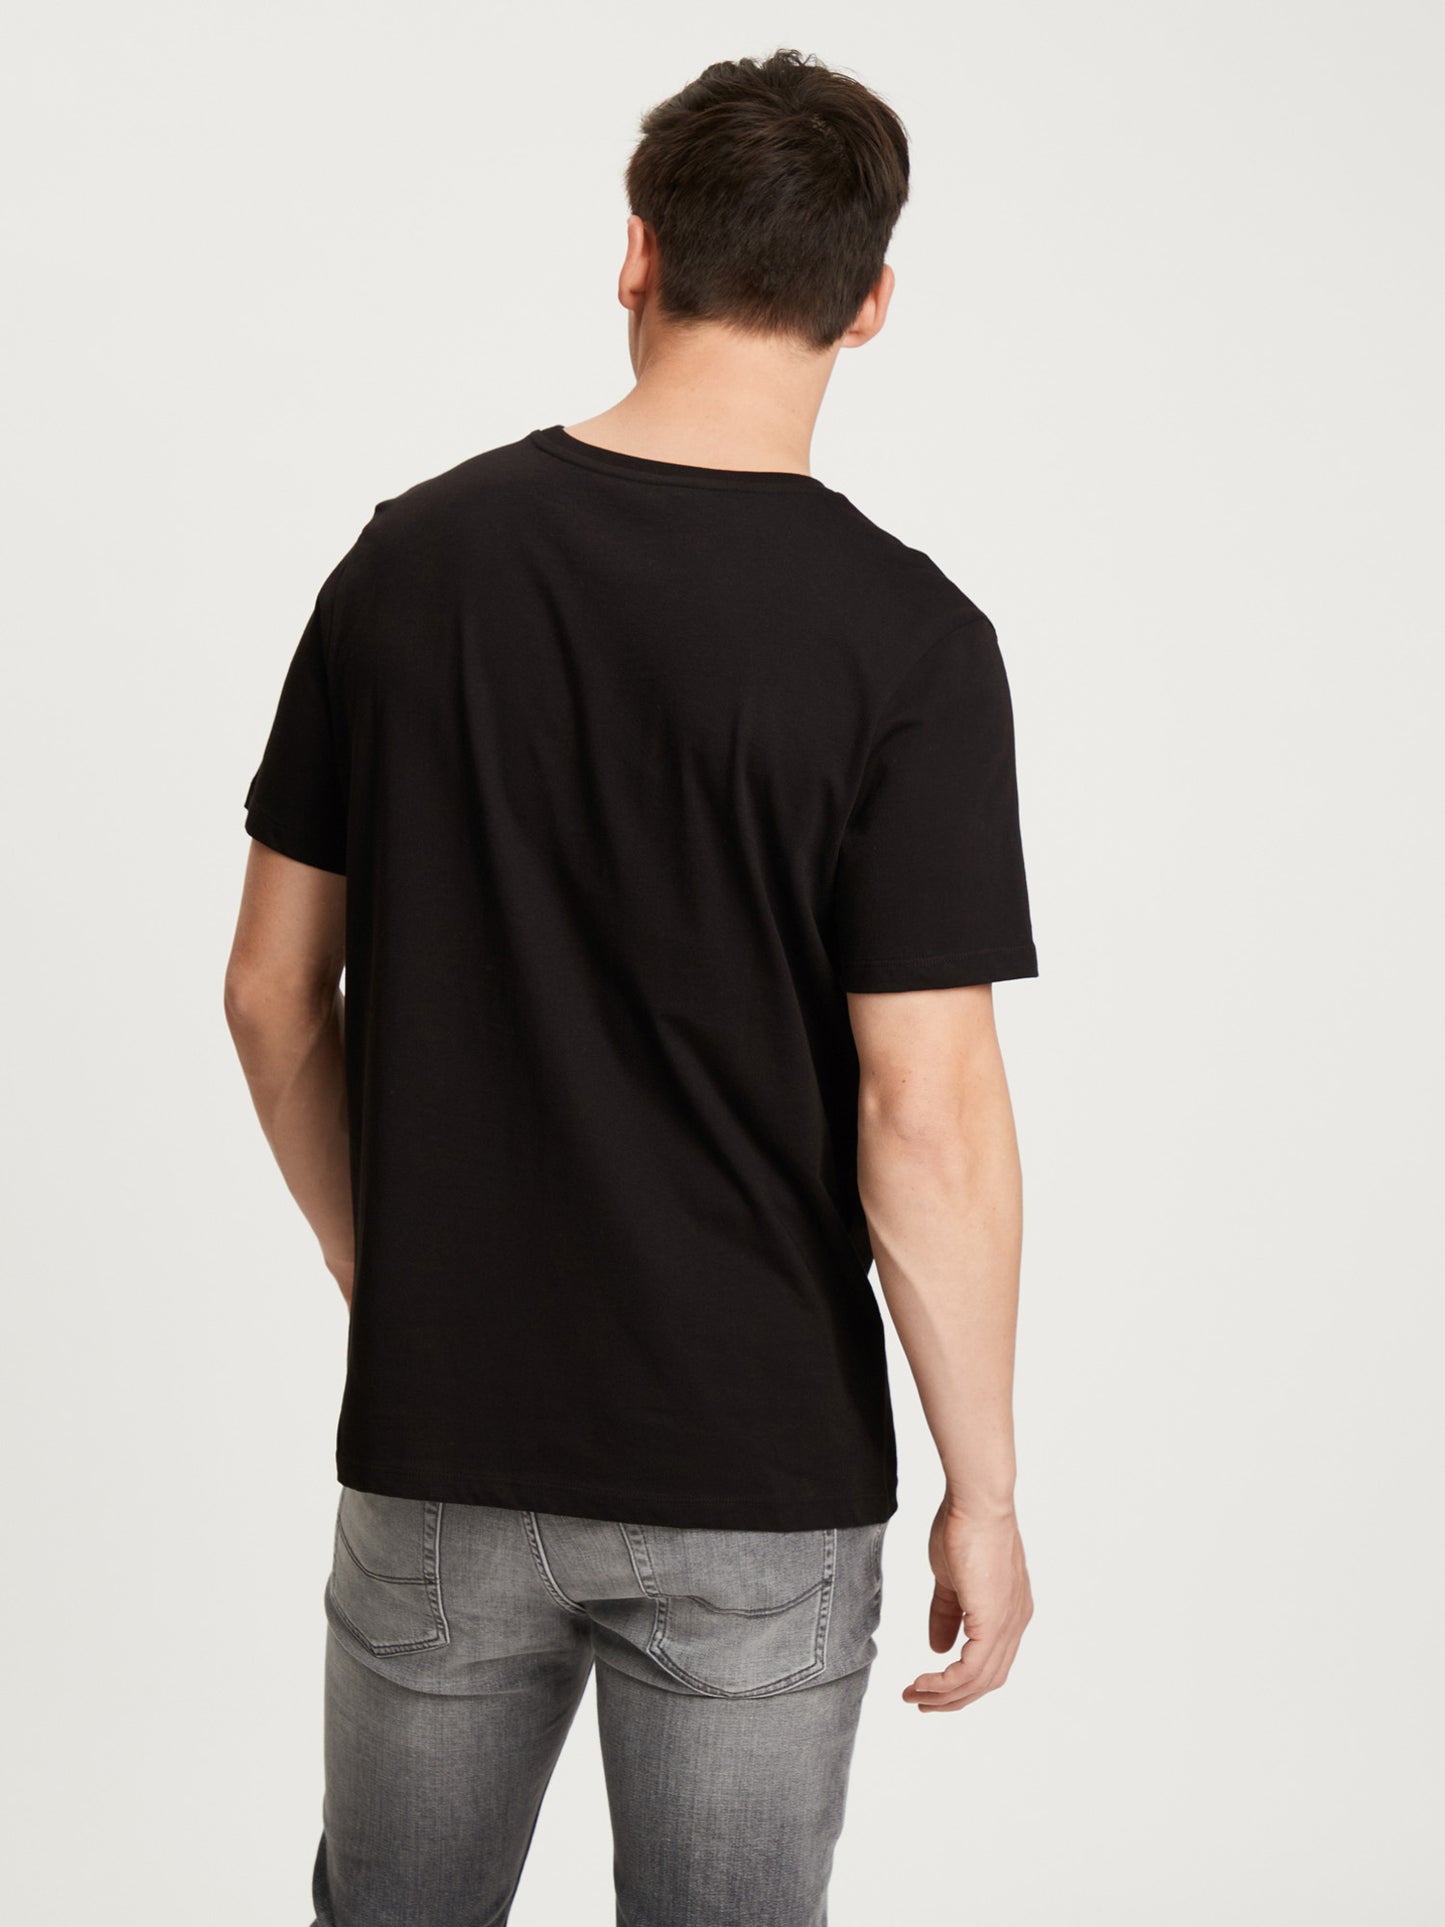 Men's regular T-shirt with large print black